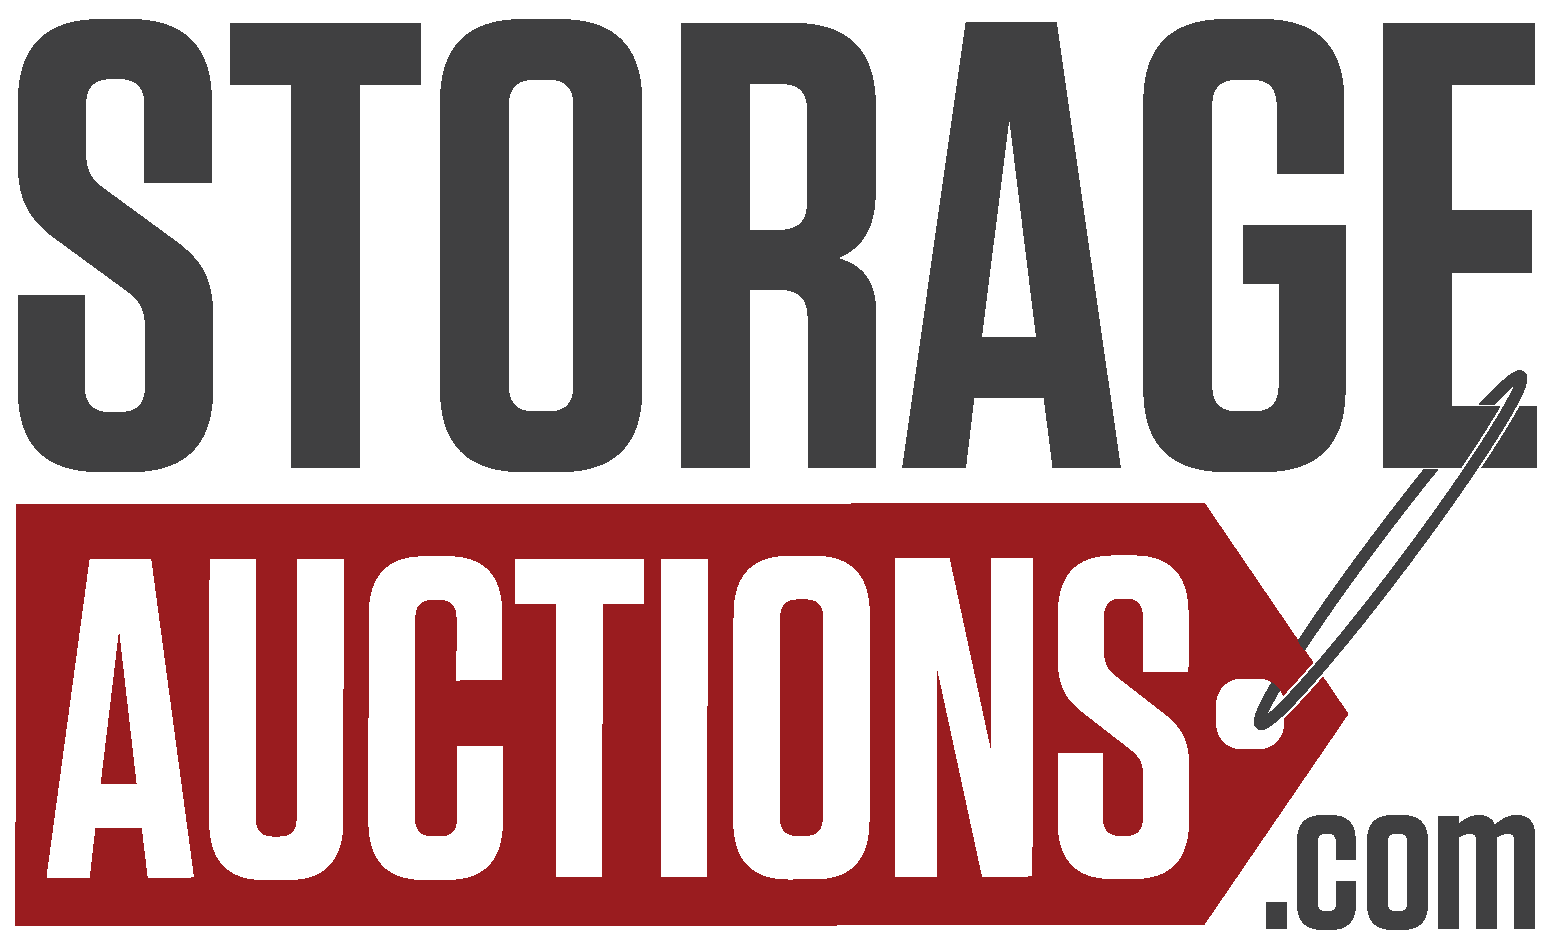 Storage Auctions logo